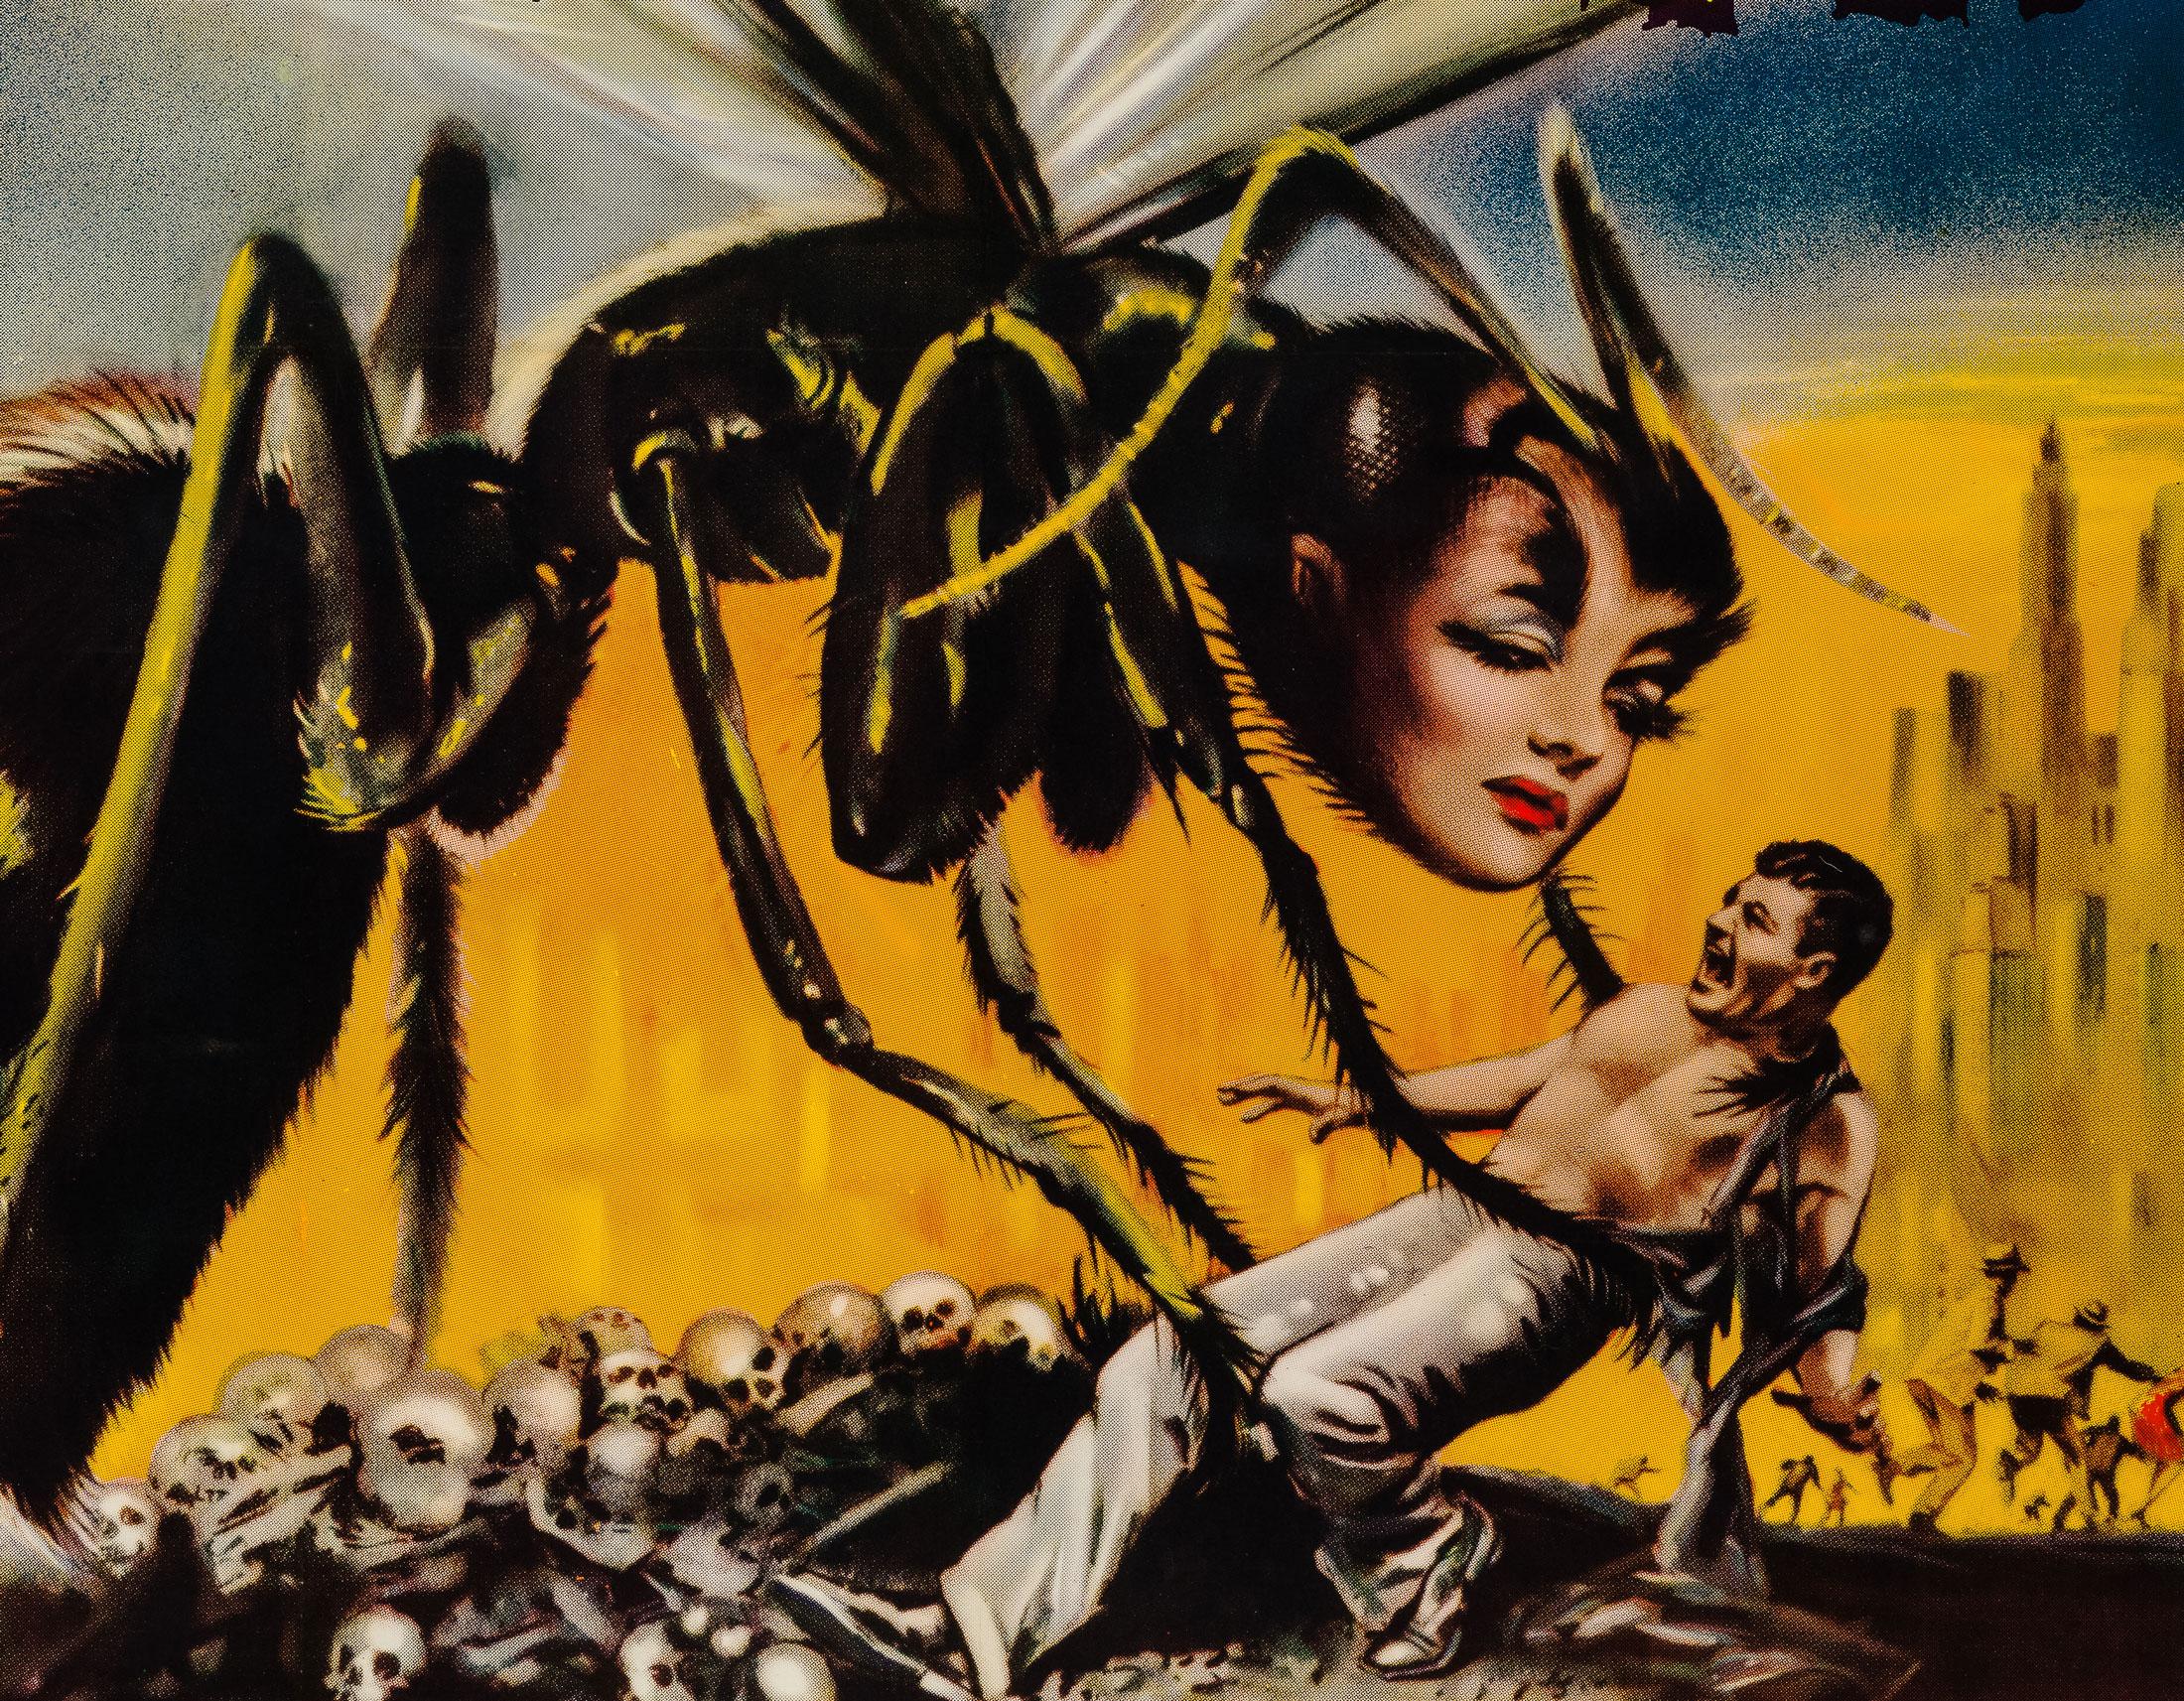 20th Century 'The Wasp Woman' Original Us Film Poster, Three Sheet, 1959